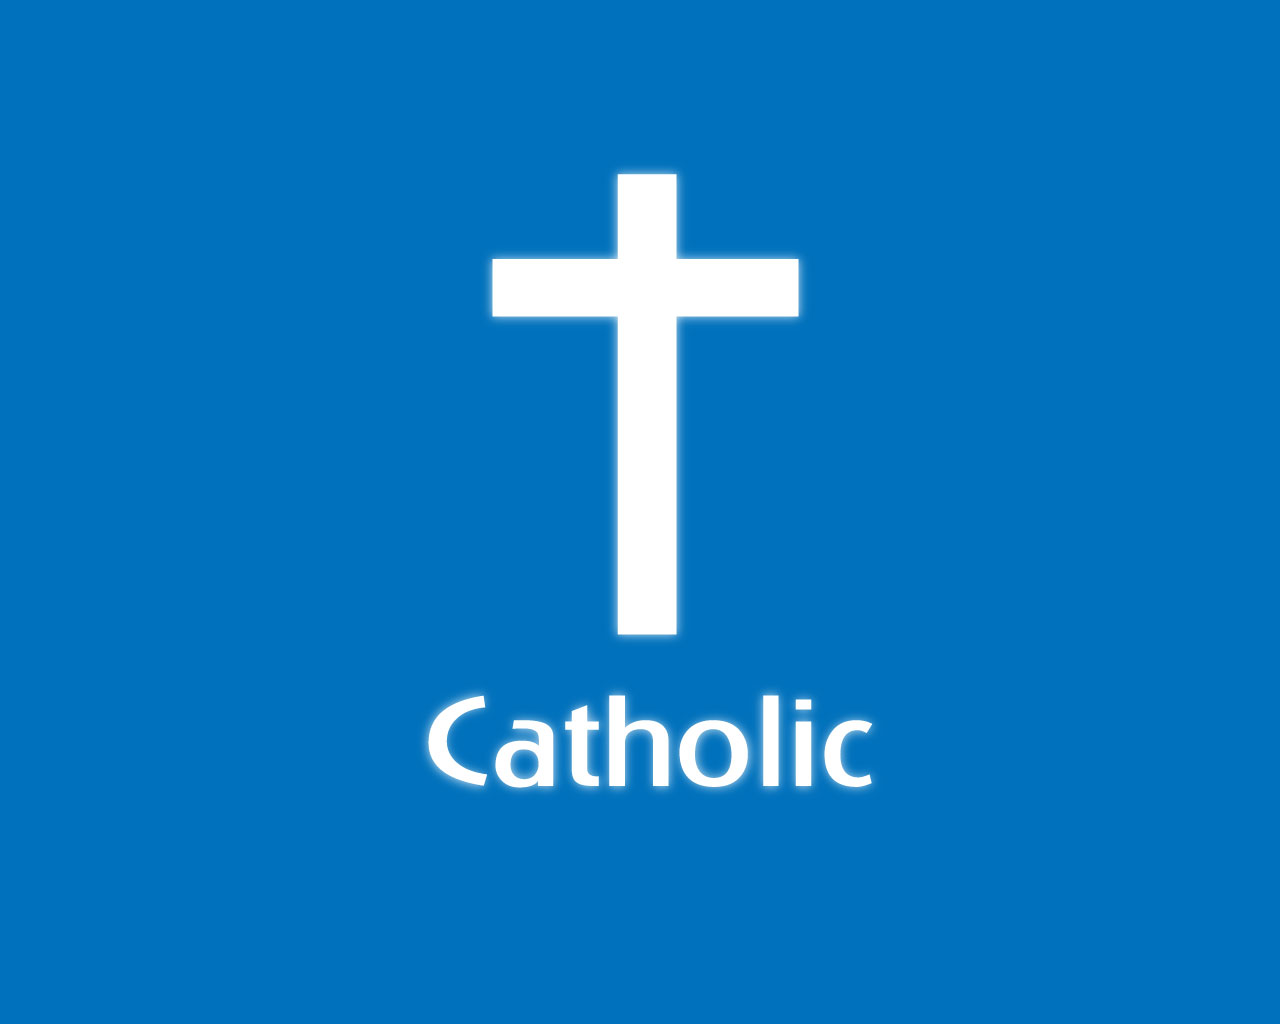 Catholic - DriverLayer Search Engine